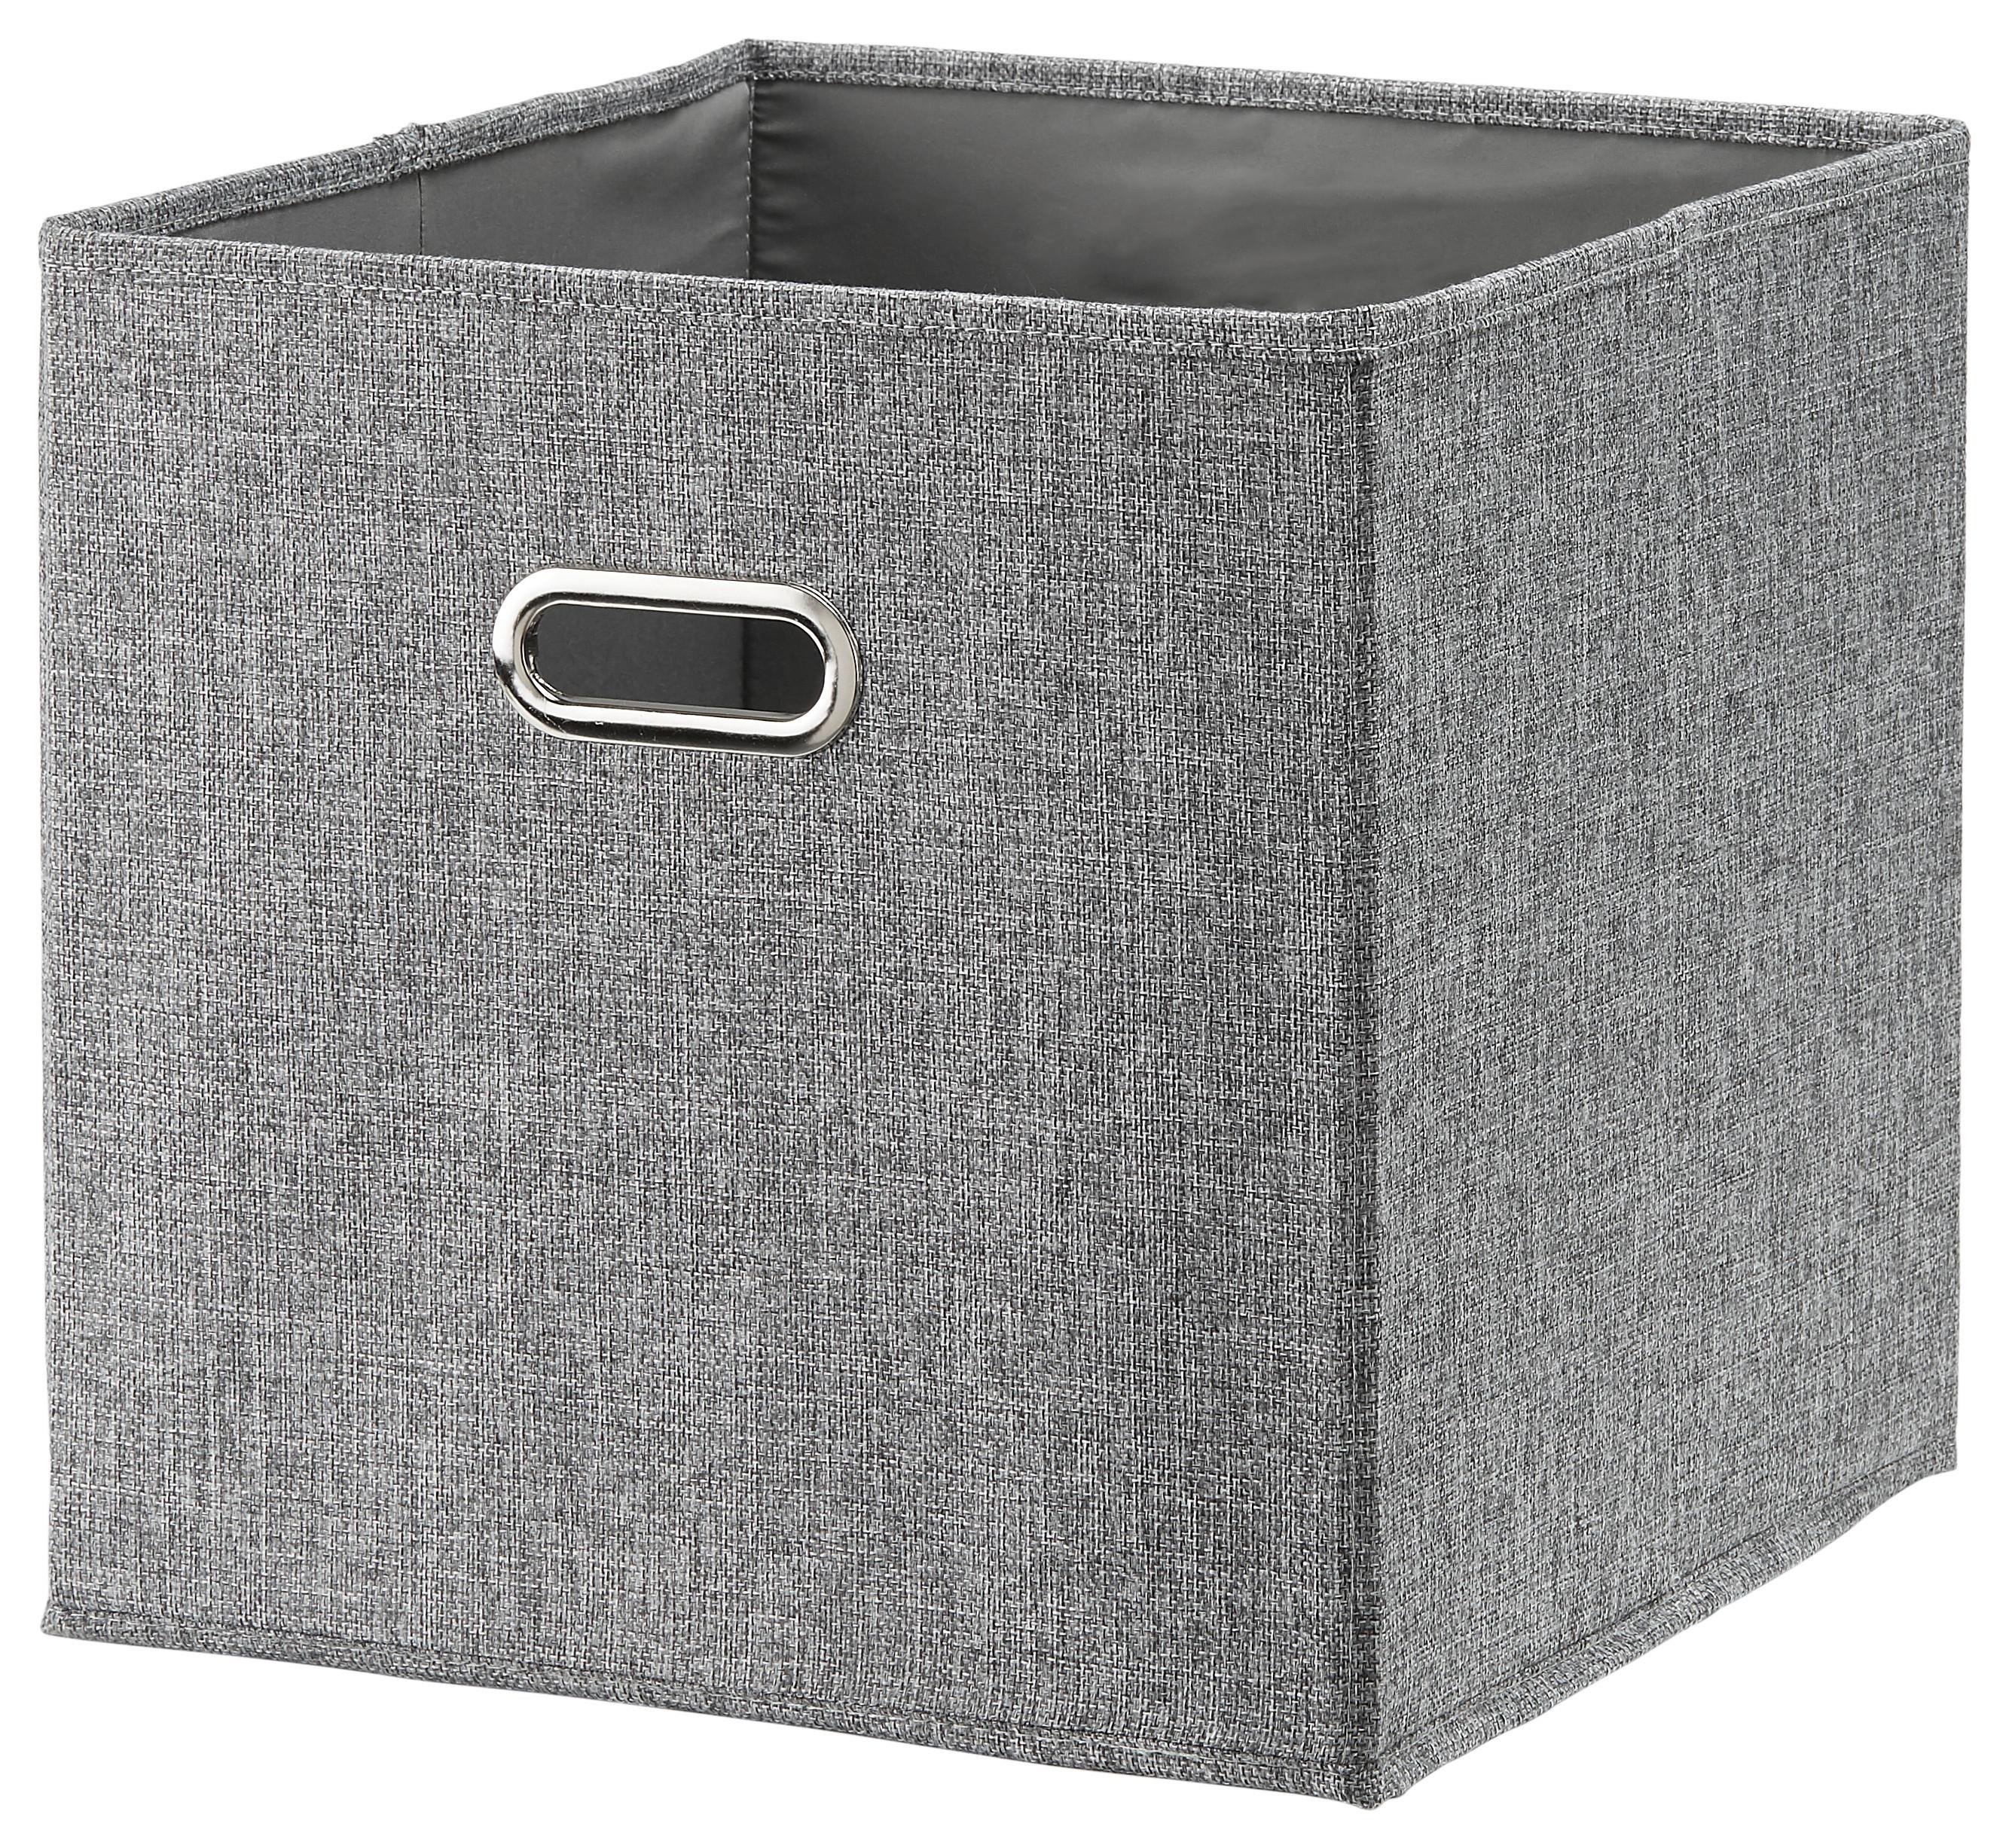 Skládací Krabice Bobby - Ca. 34l -Ext- -Akt- - šedá, Moderní, karton/textil (33/32/33cm) - Premium Living